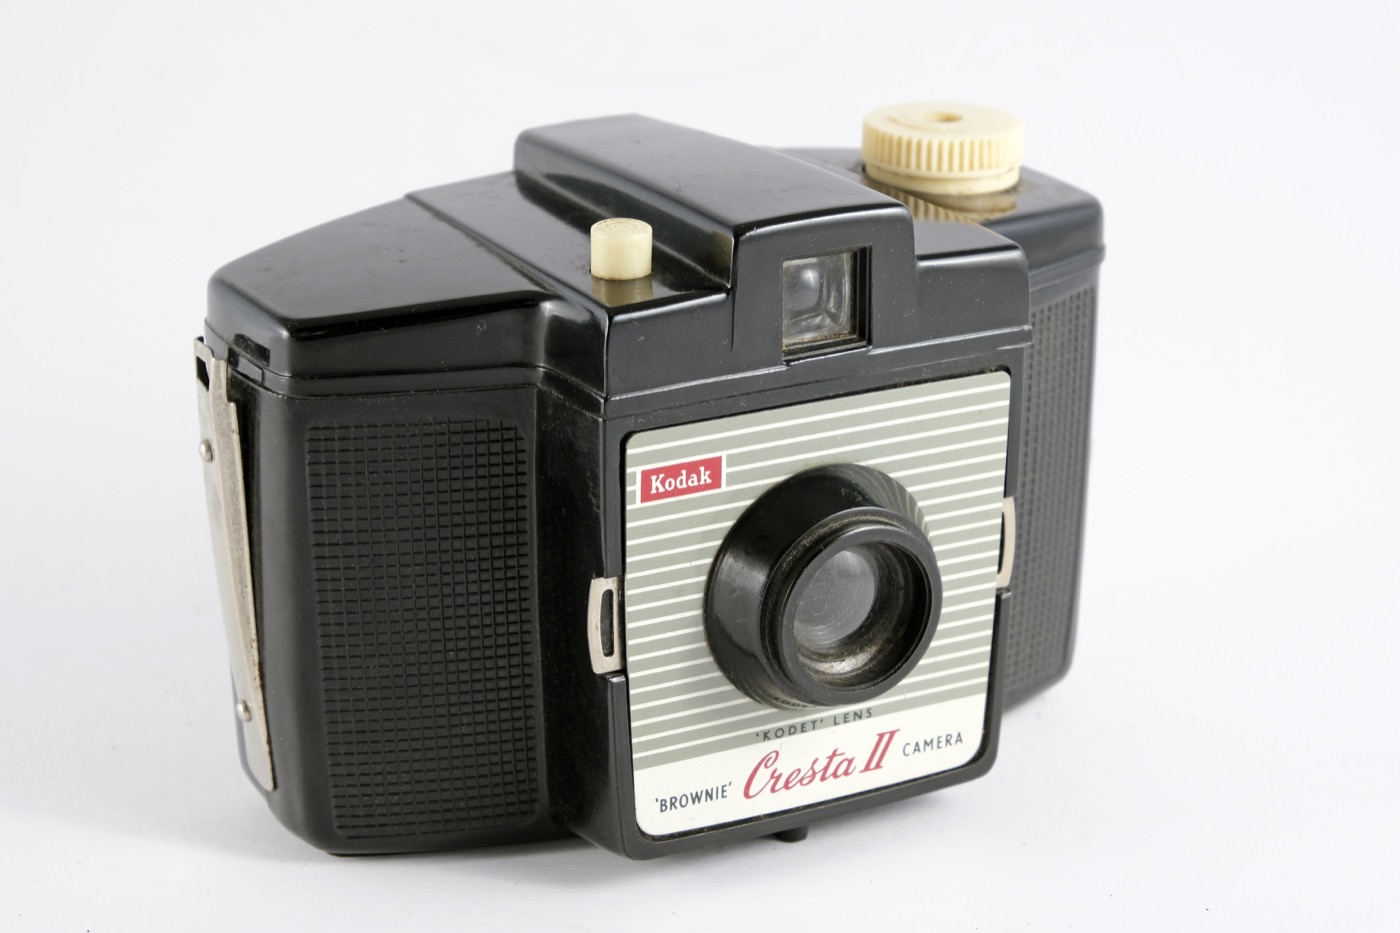 Kodak Brownie Cresta II camera